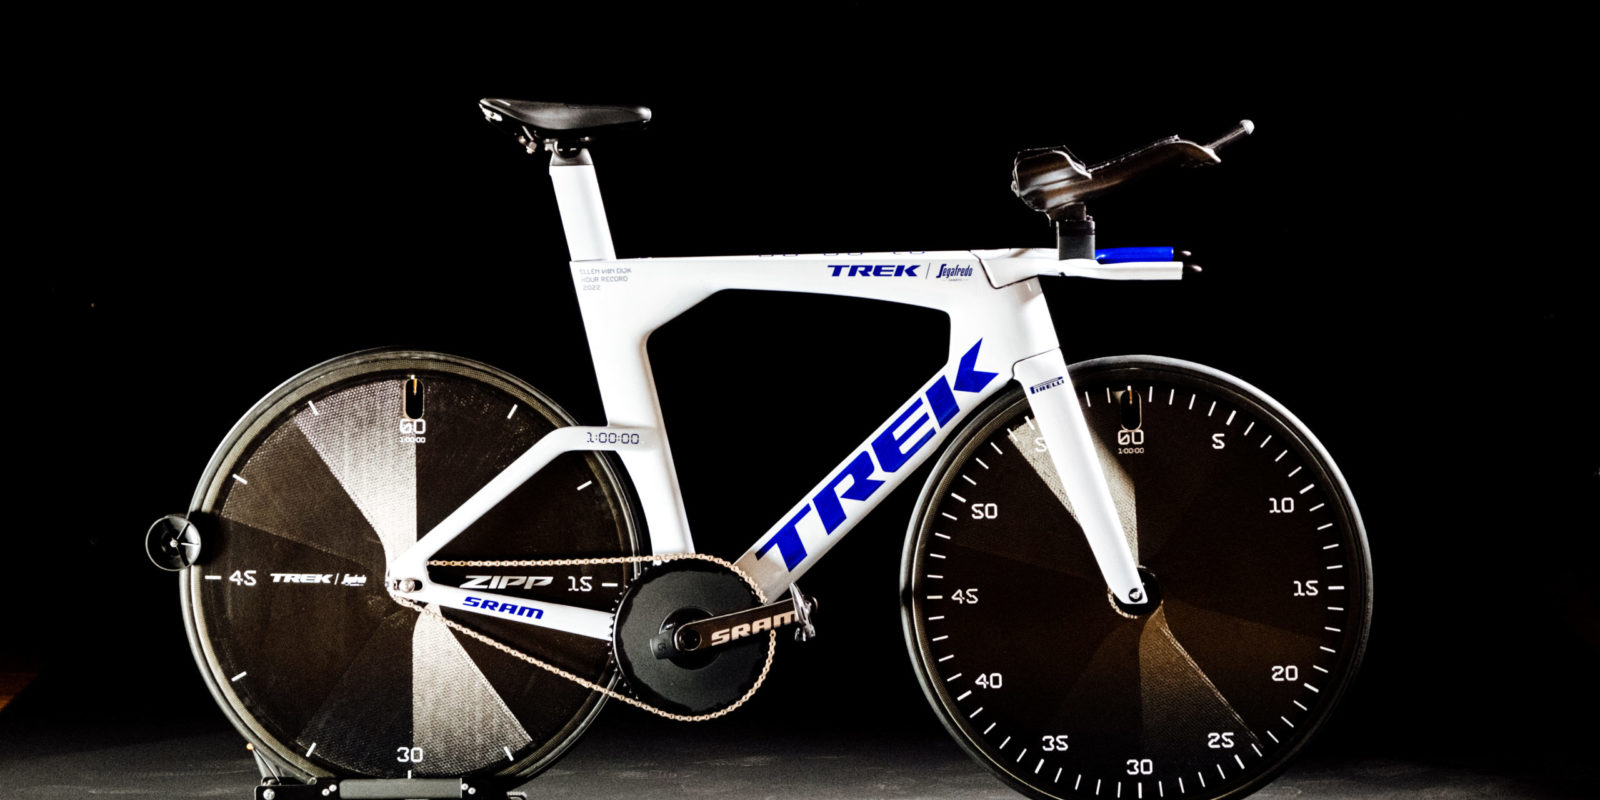 Trek-S-Ellen-Bike-Hour-Record-120-scaled-1600x800-c-center.jpeg?x16209